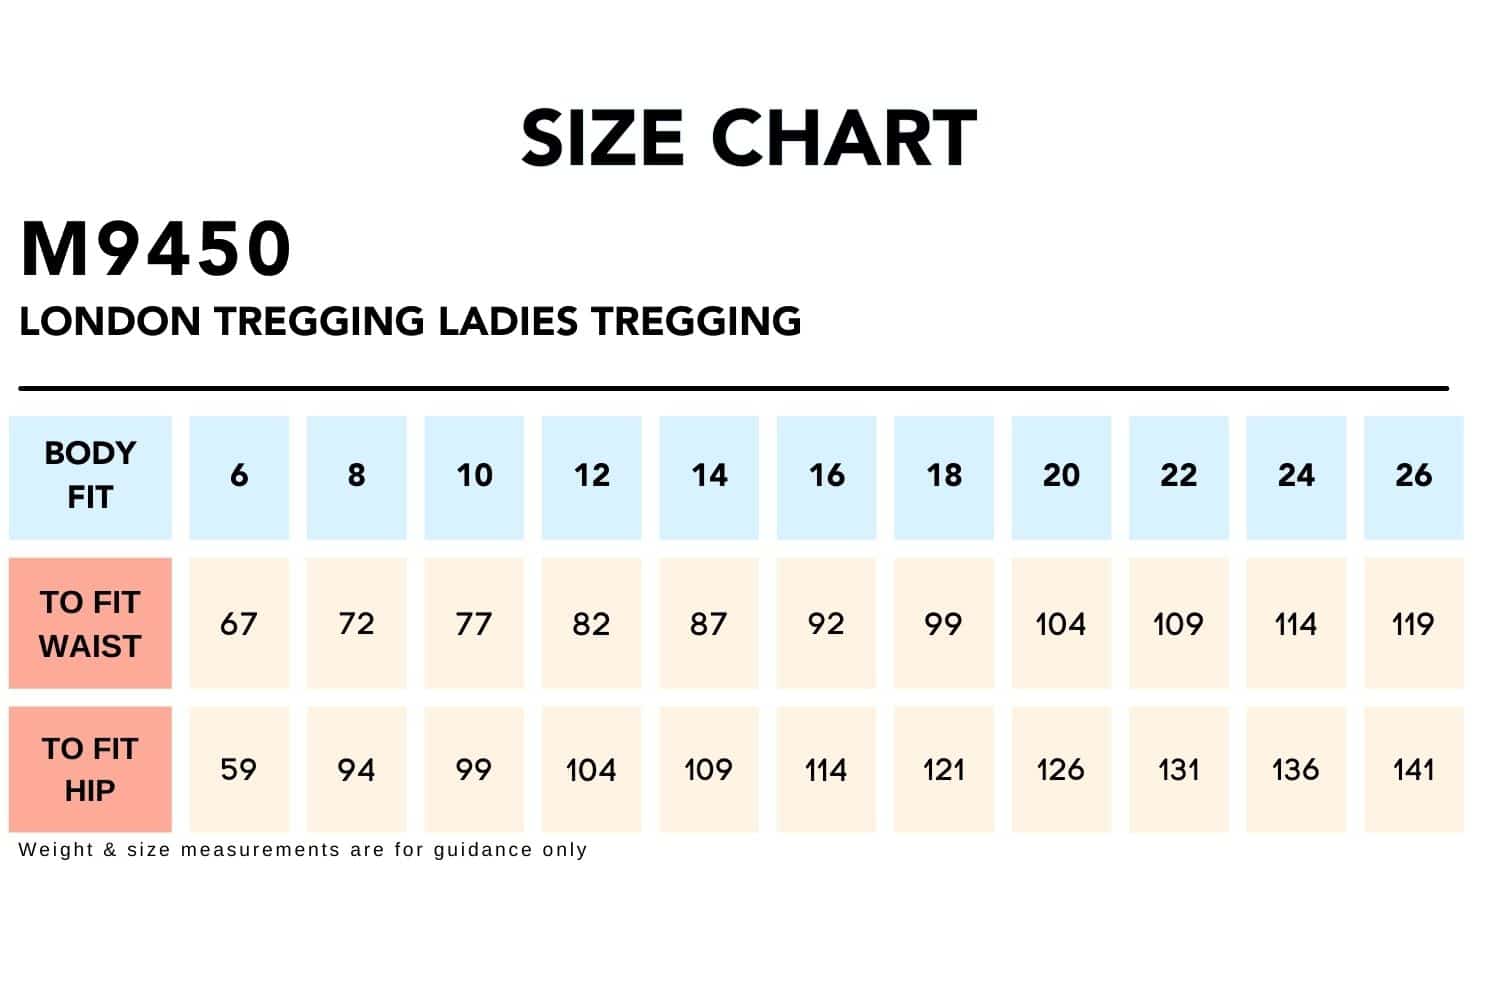 Size Chart_M9450 LONDON TREGGING LADIES TREGGING